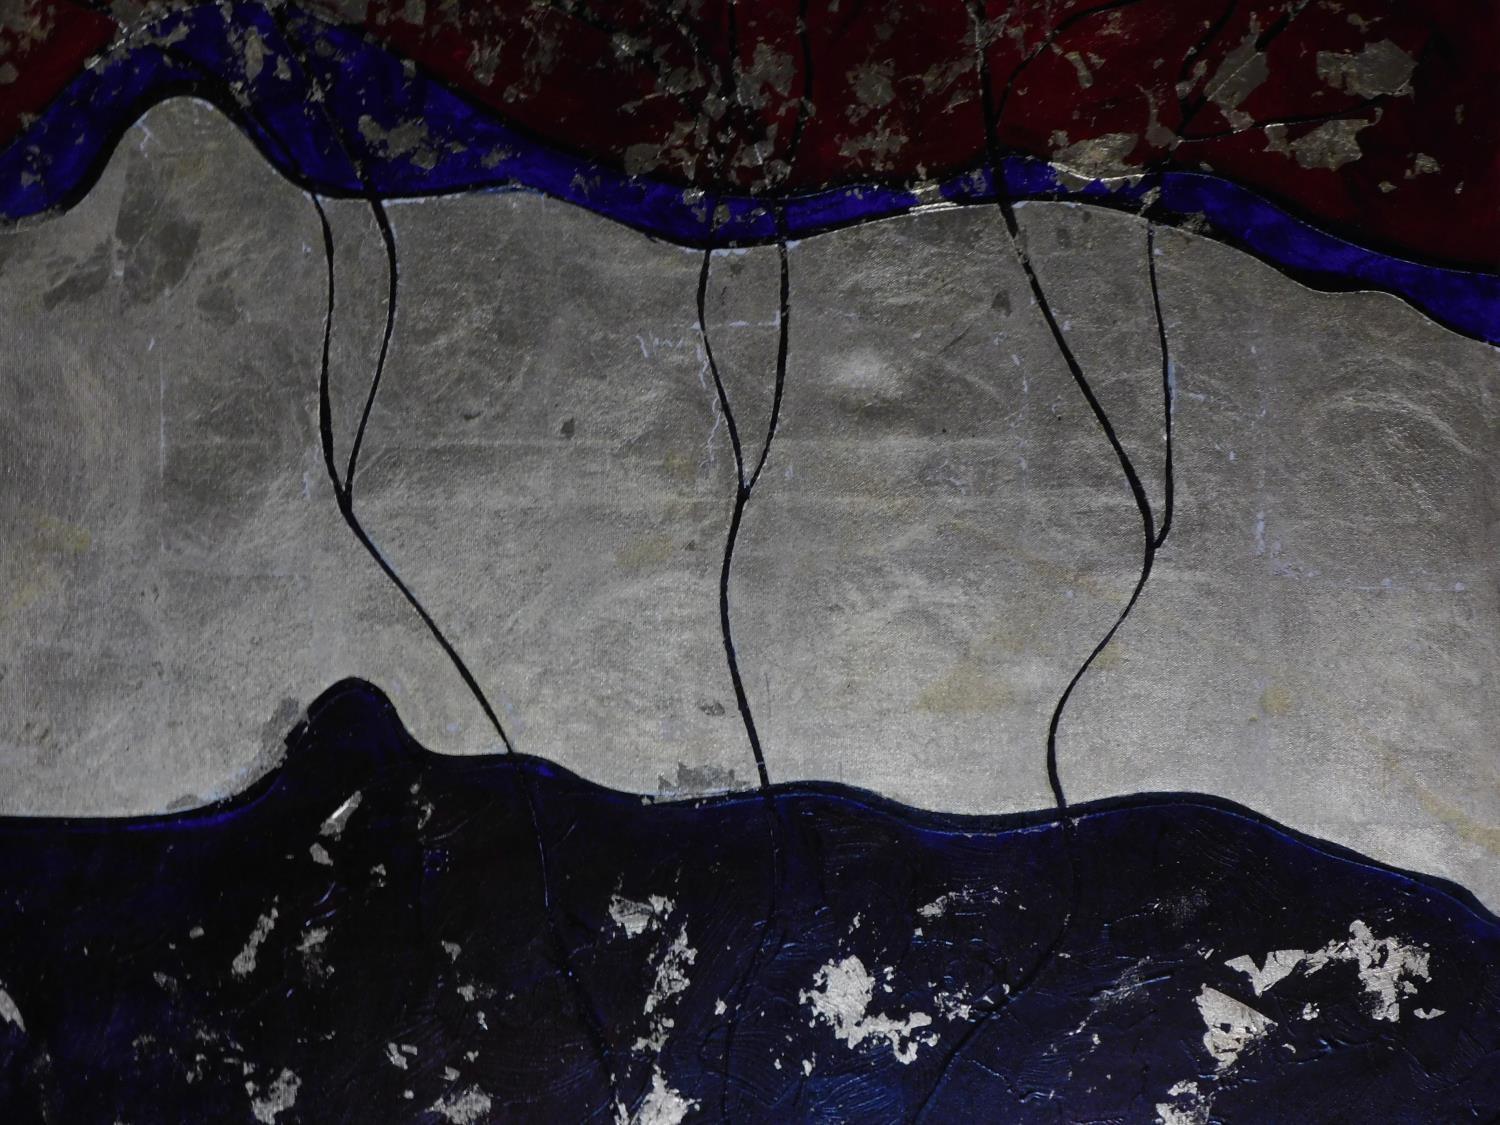 An unframed abstract oil on canvas signed Philip Raskin 04. 90x90cm